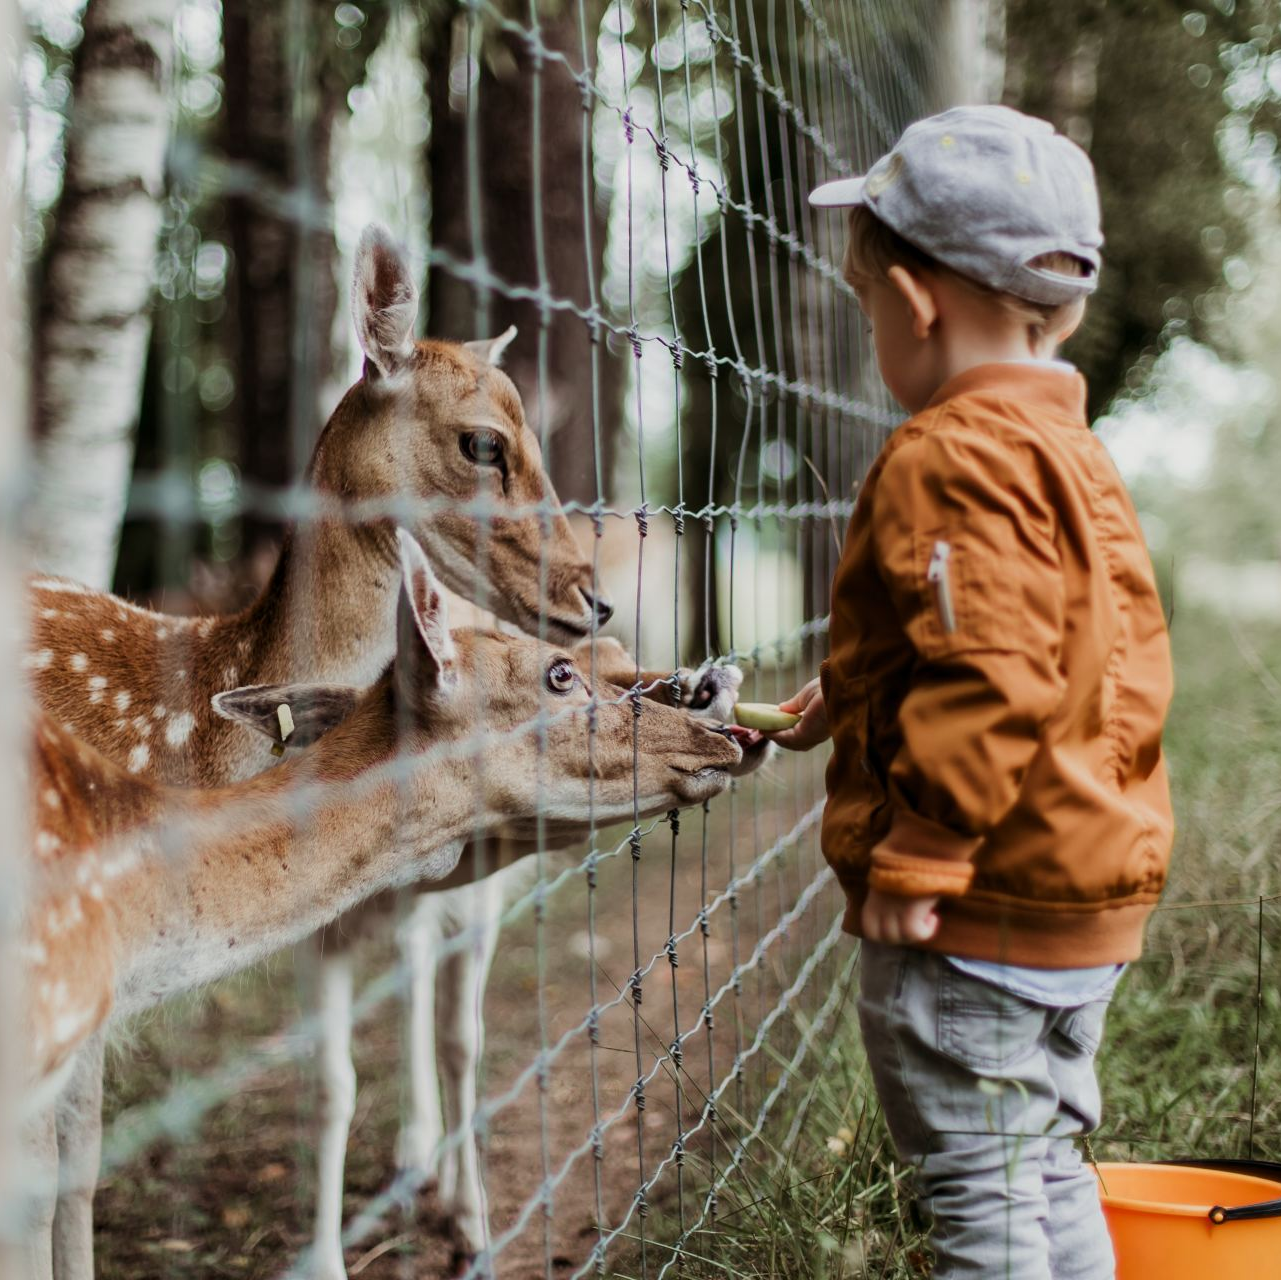 Child feeding deer